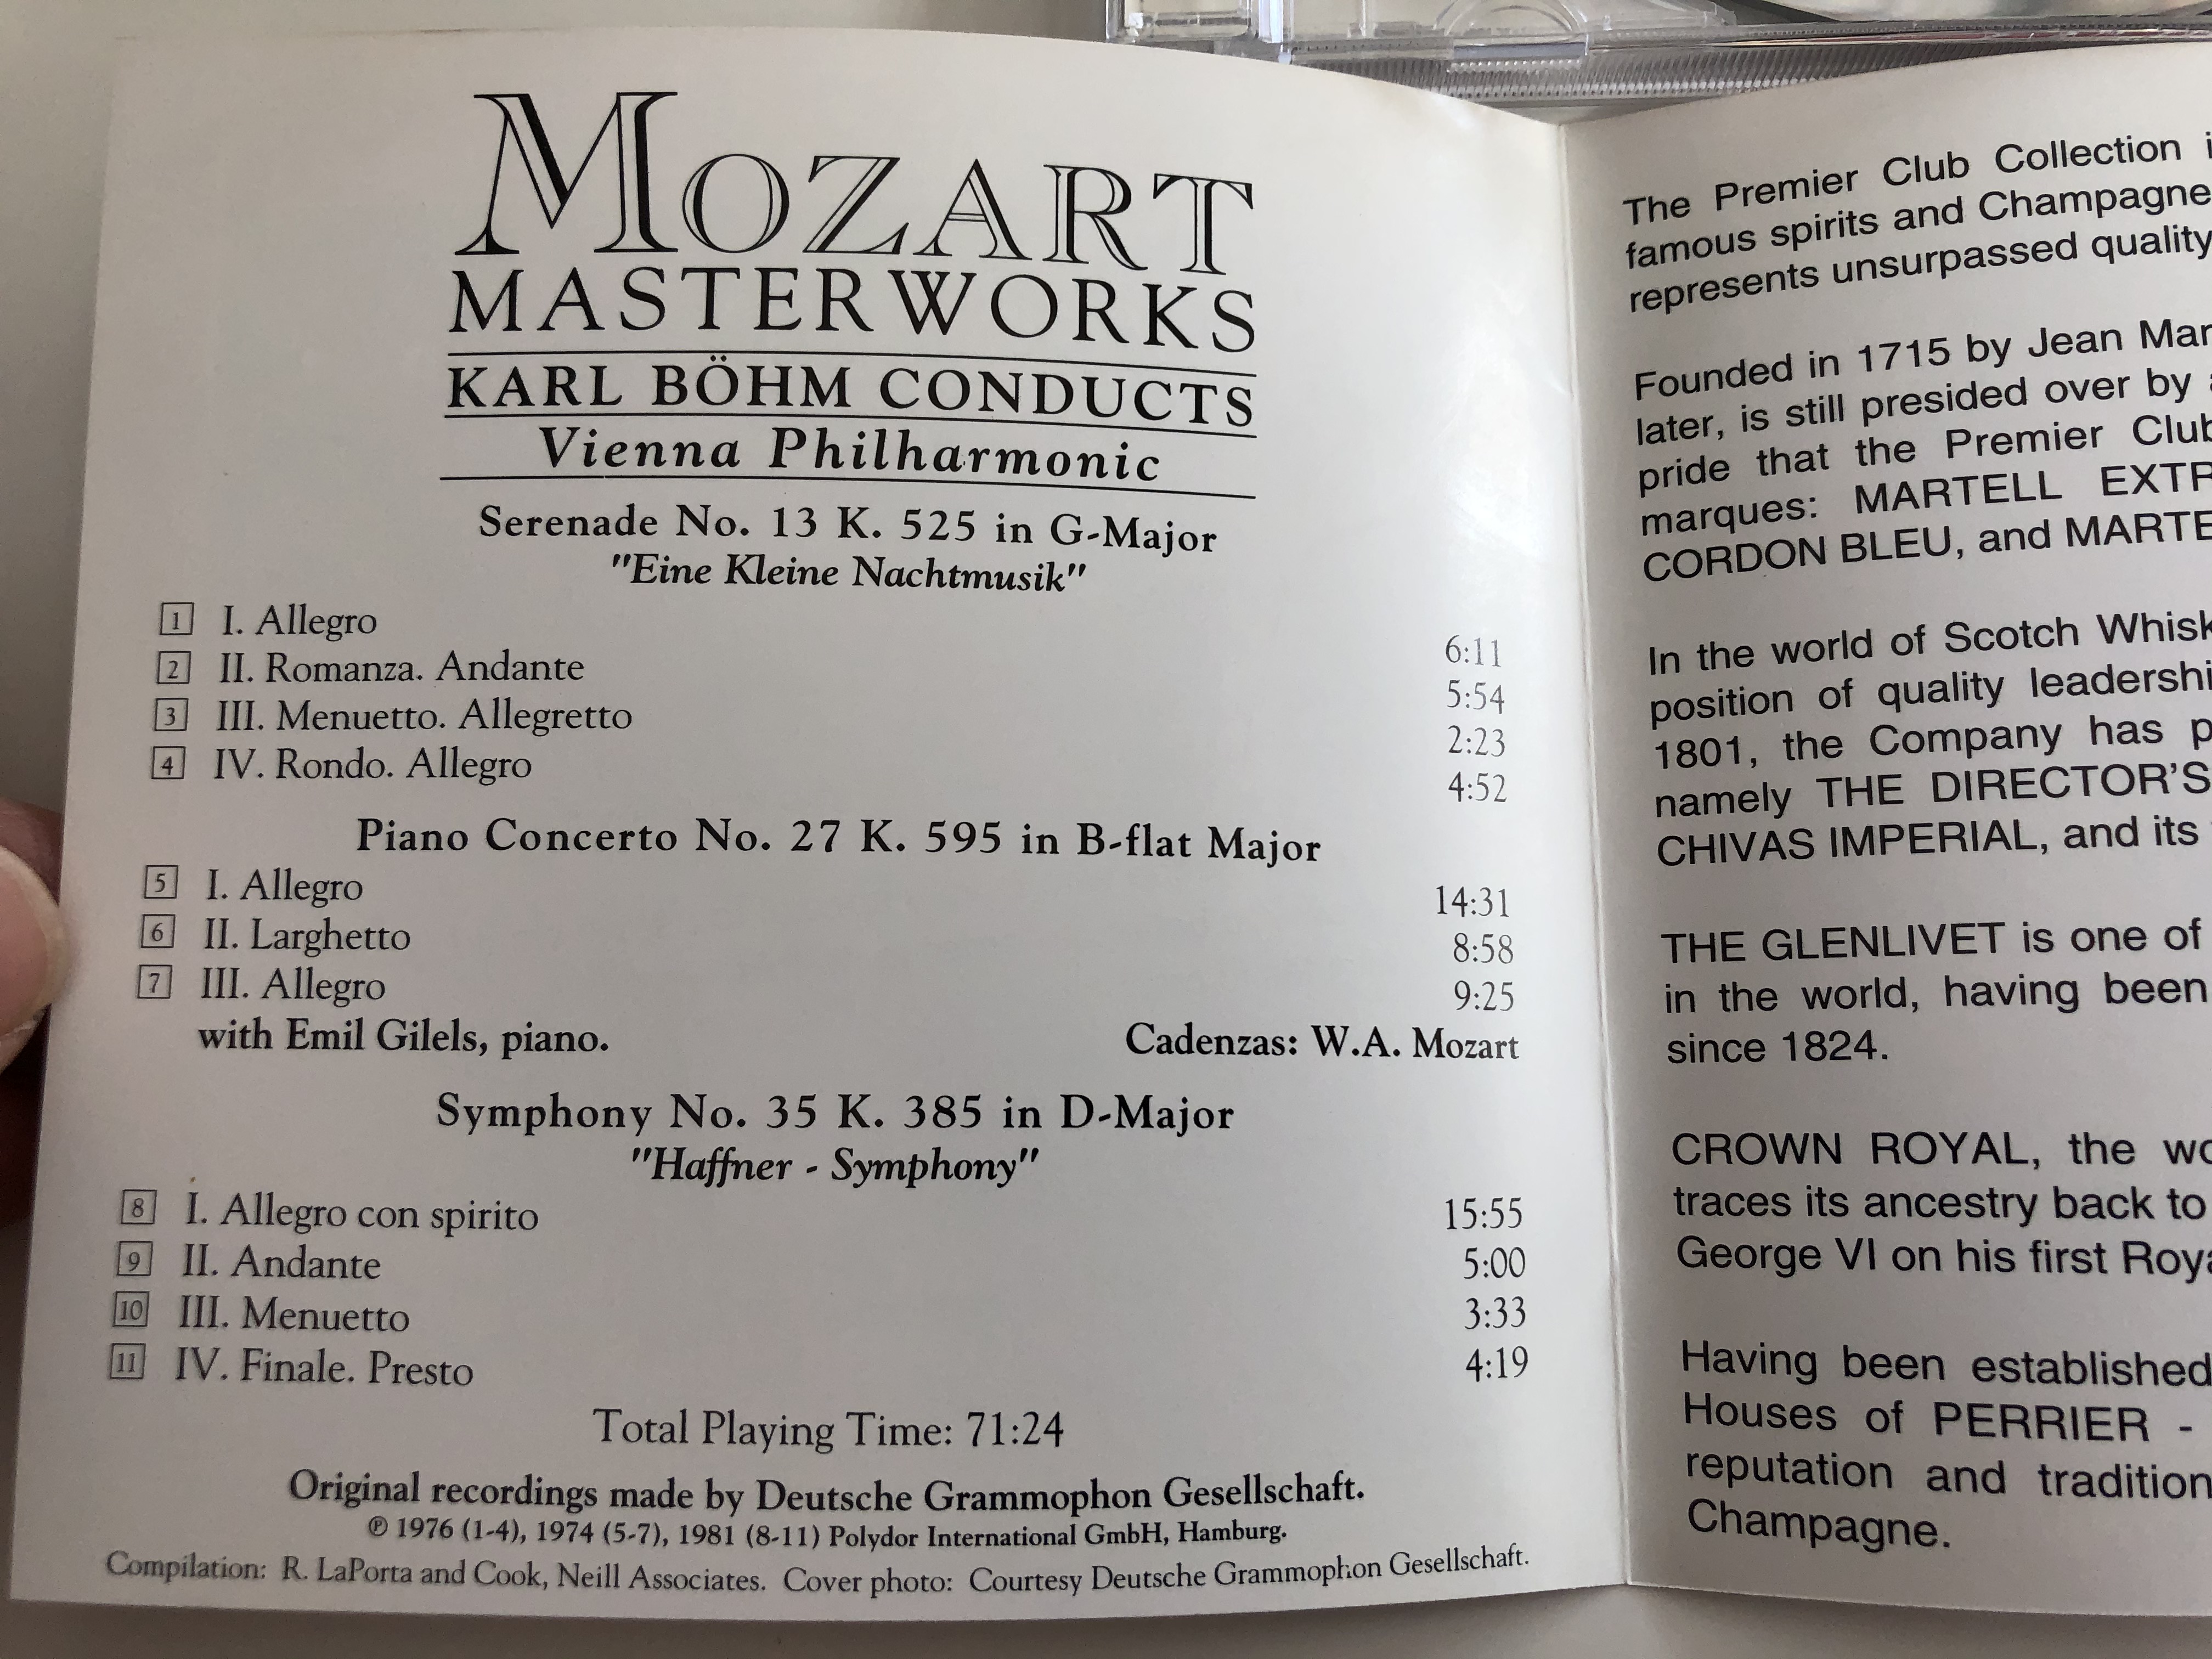 mozart-masterworks-limited-edition-vol.3-conducted-karl-bohm-vienna-philharmonic-premier-club-collection-audio-cd-1992-pcc-003-2-.jpg